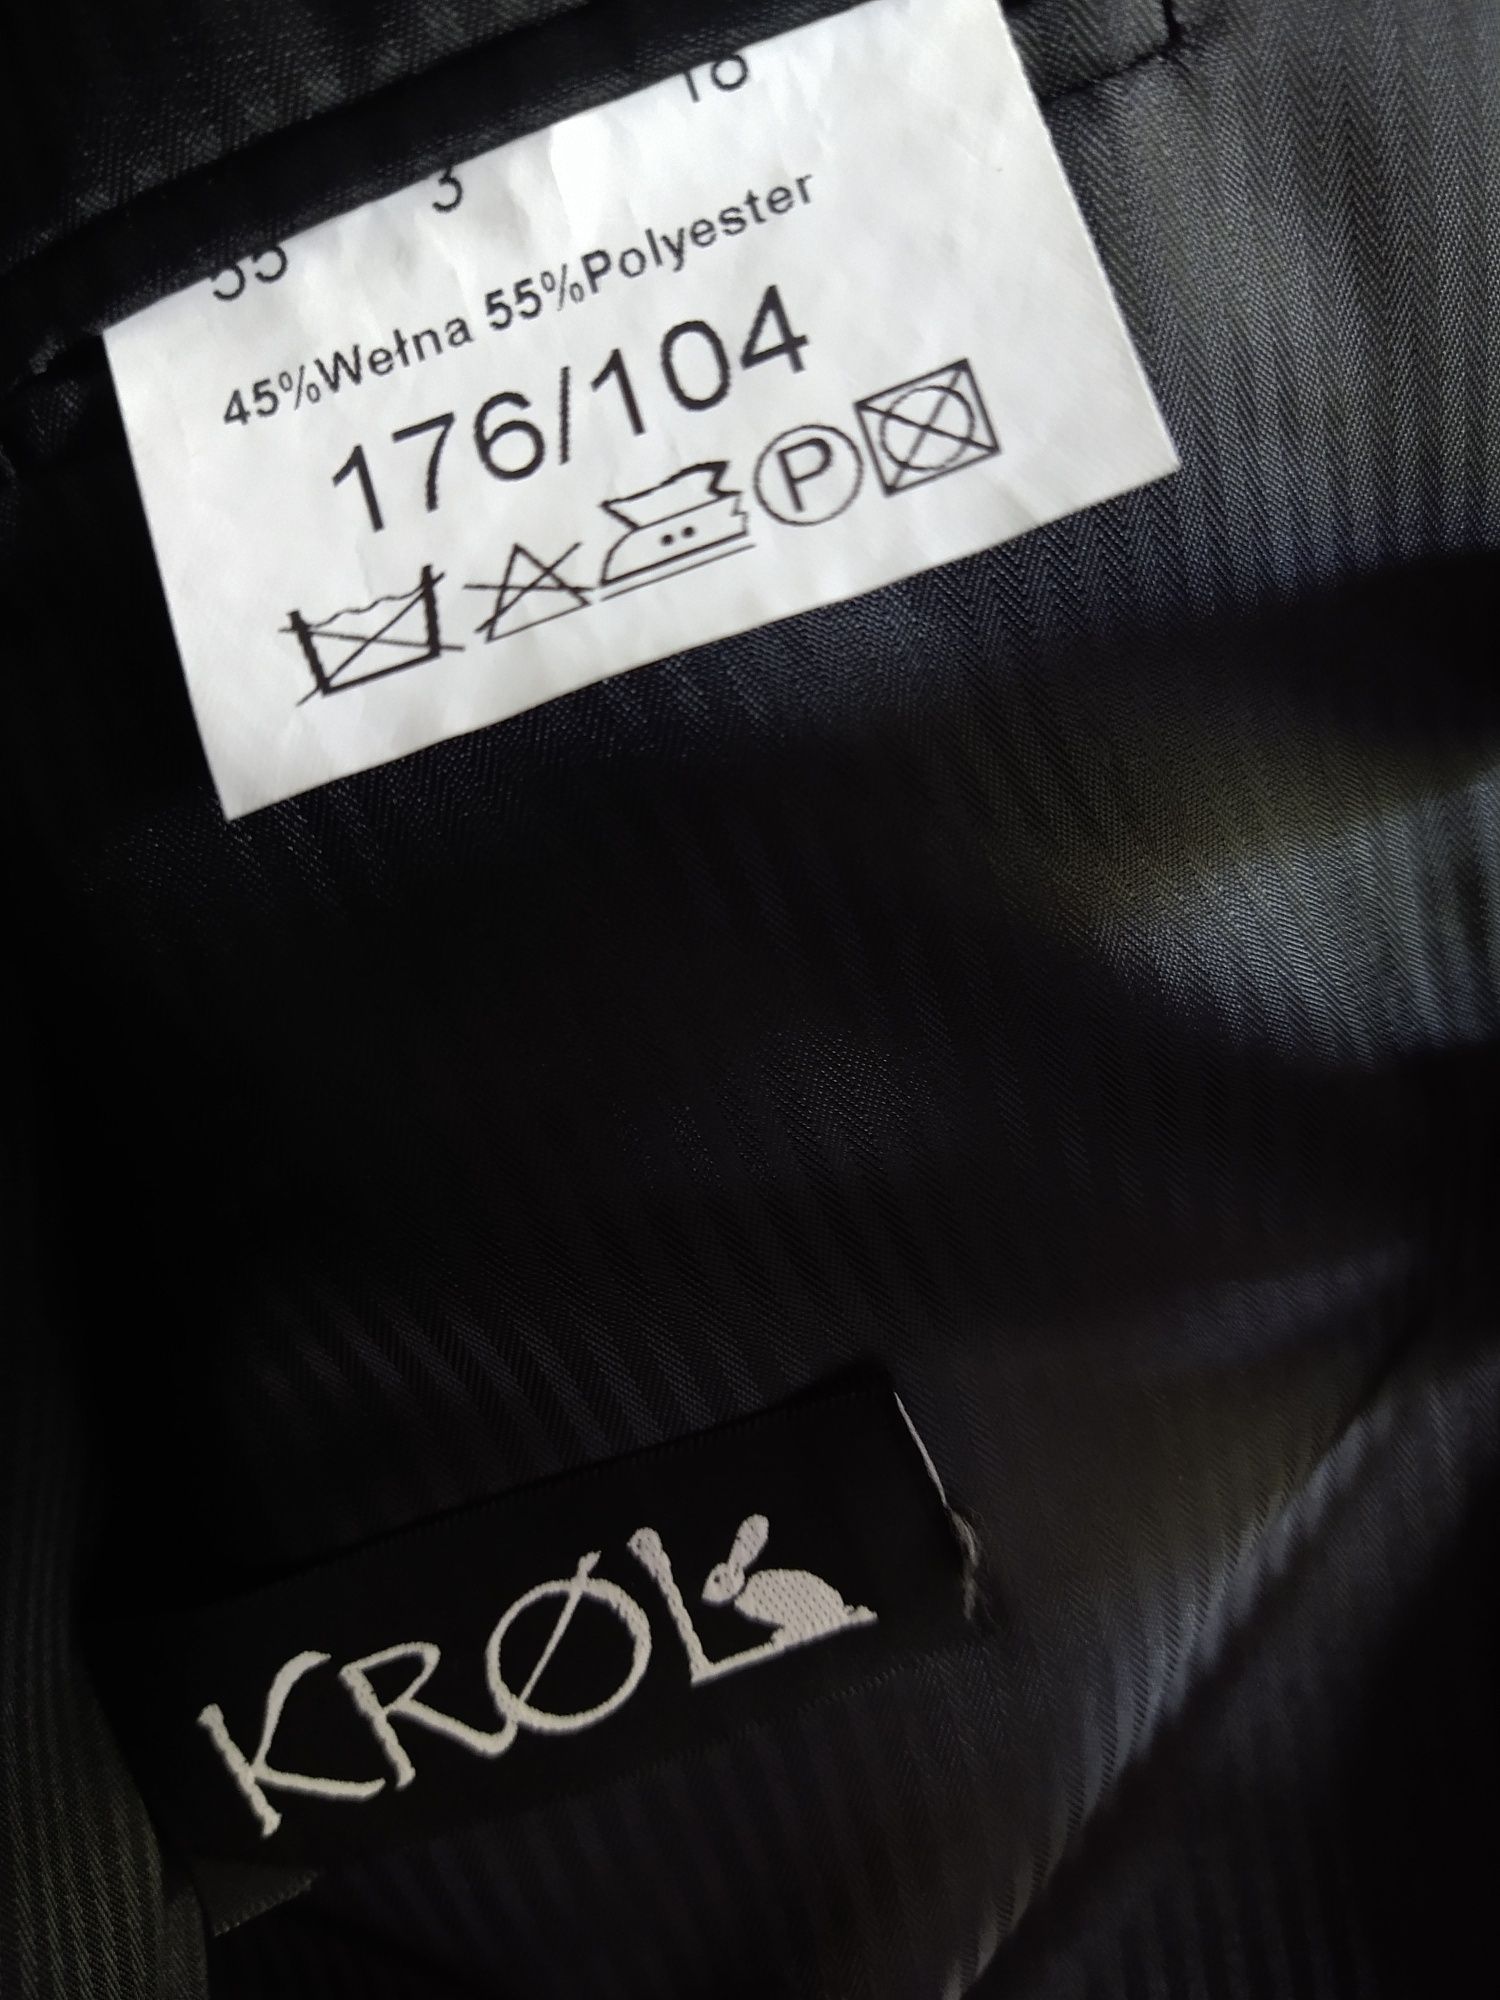 Piękny garnitur firma Krok wzrost 176